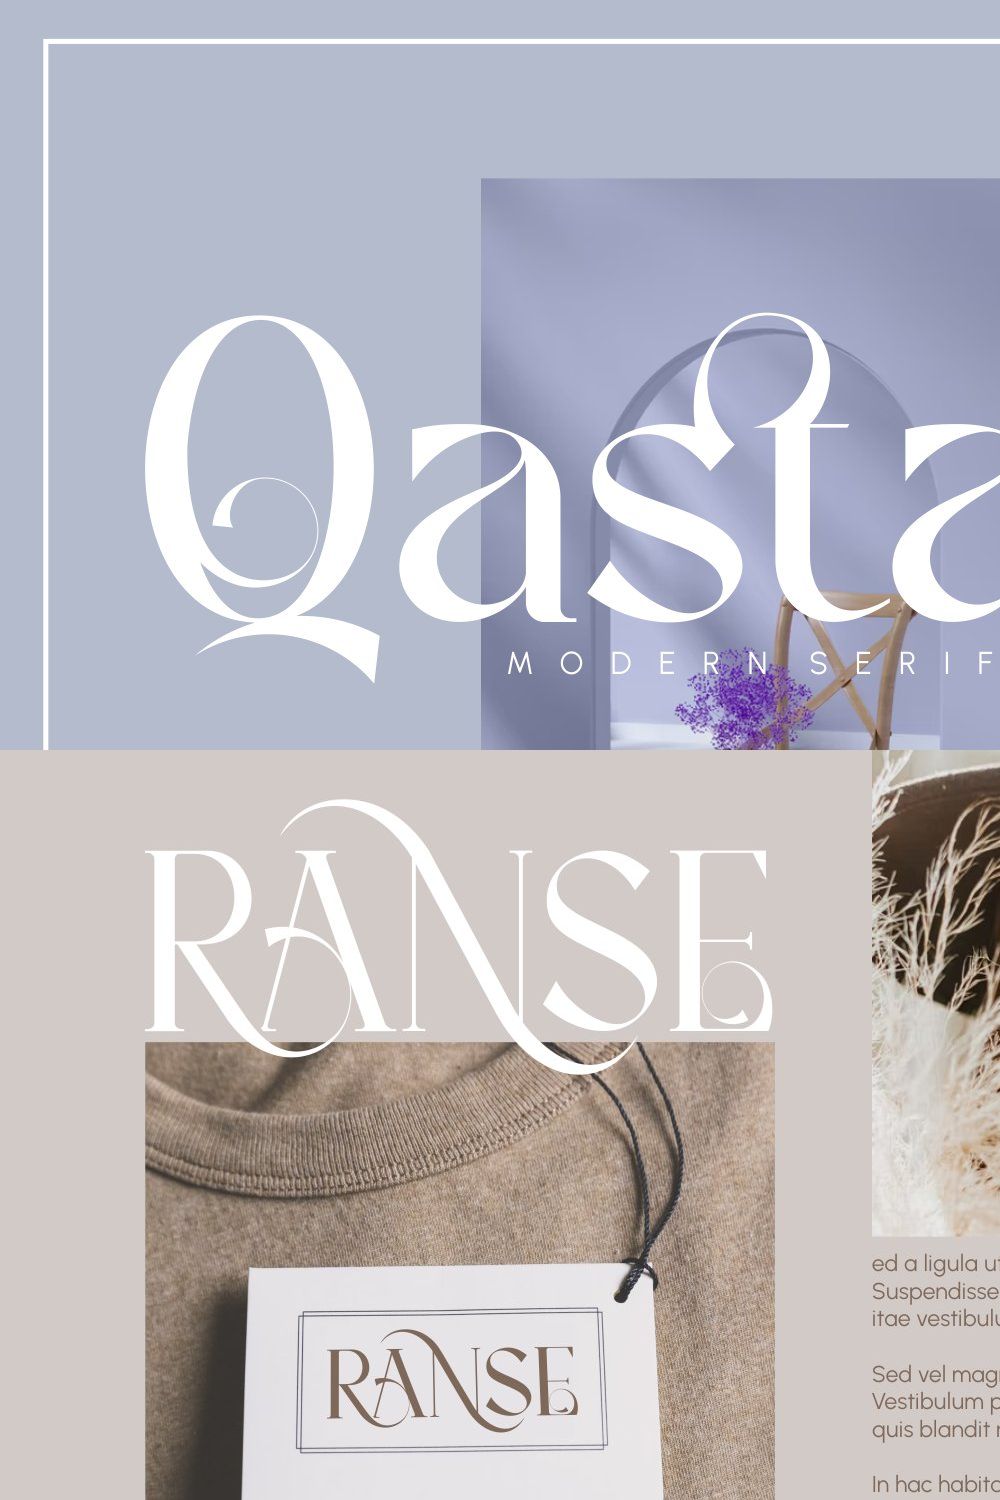 Qastars _ modern serif pinterest preview image.